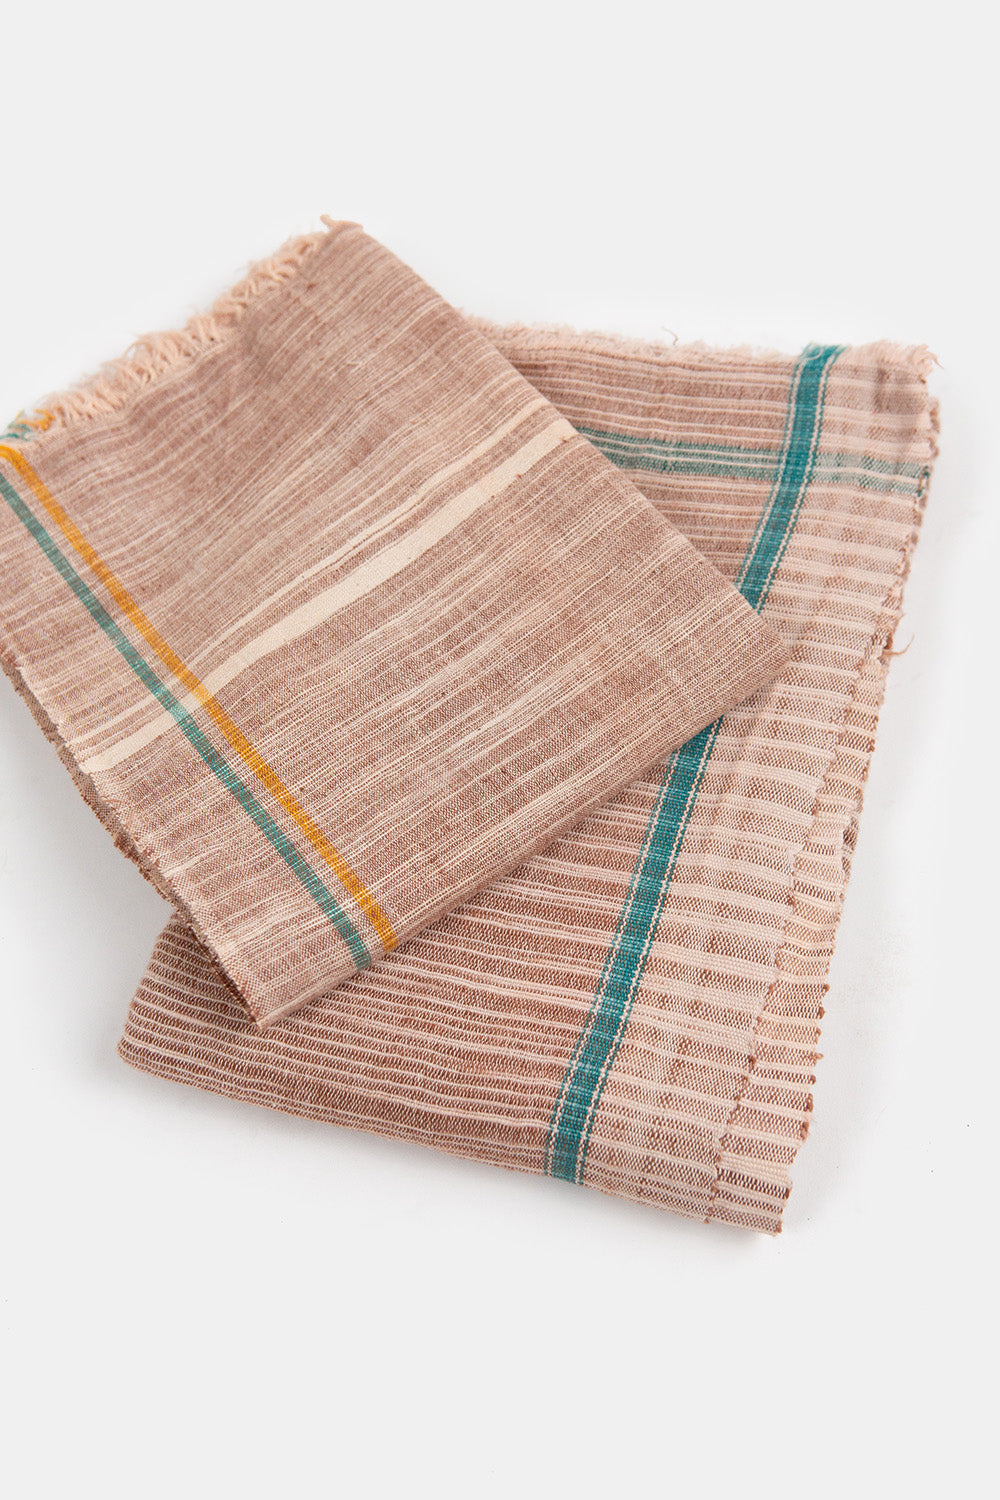 Khadi Cotton Towel in Nougat